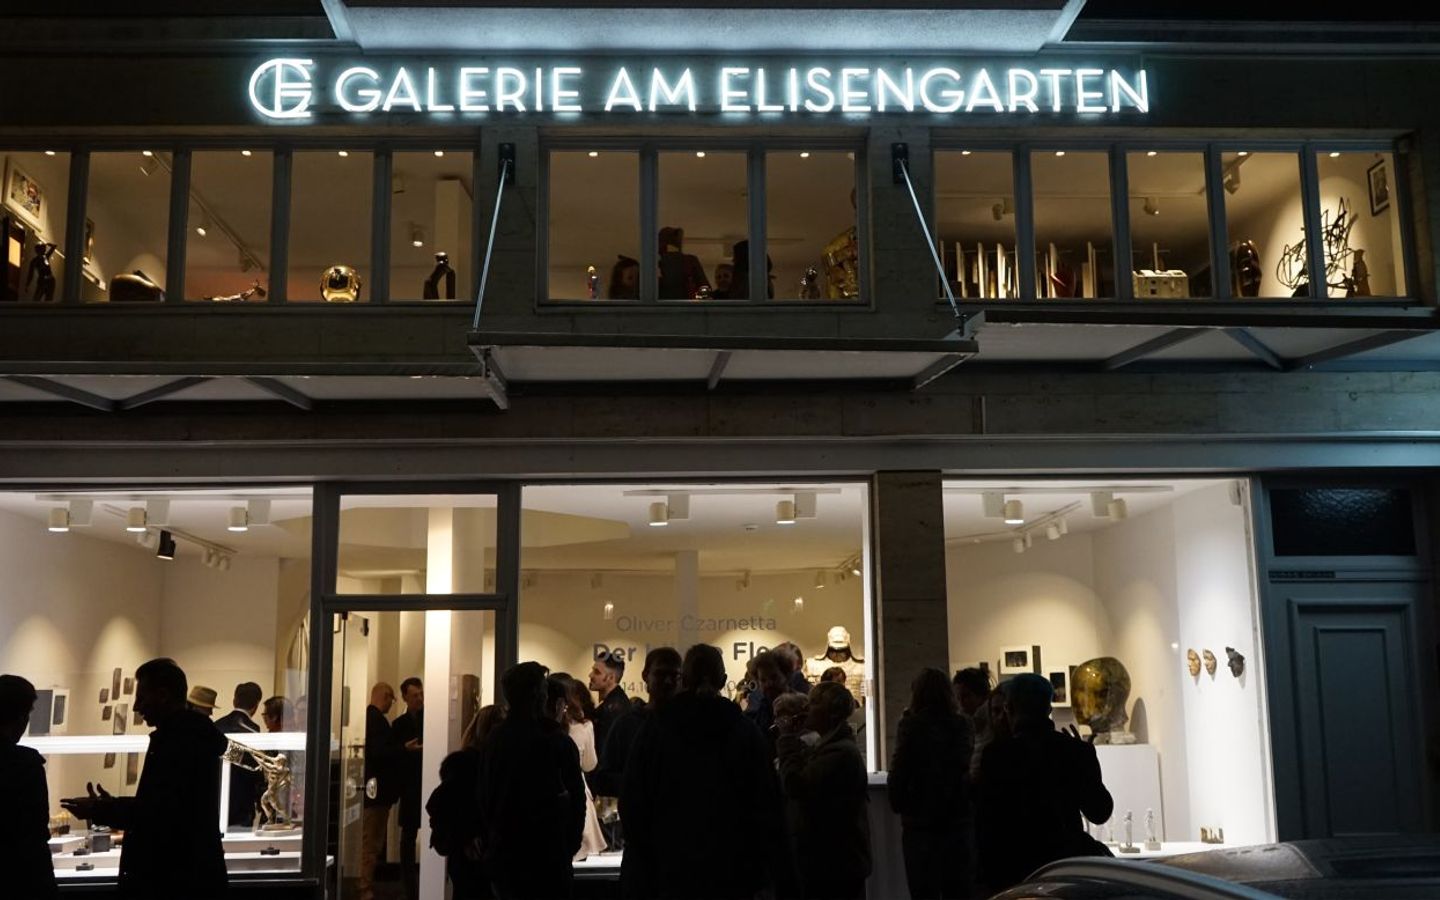 Gallery at the Elisengarten